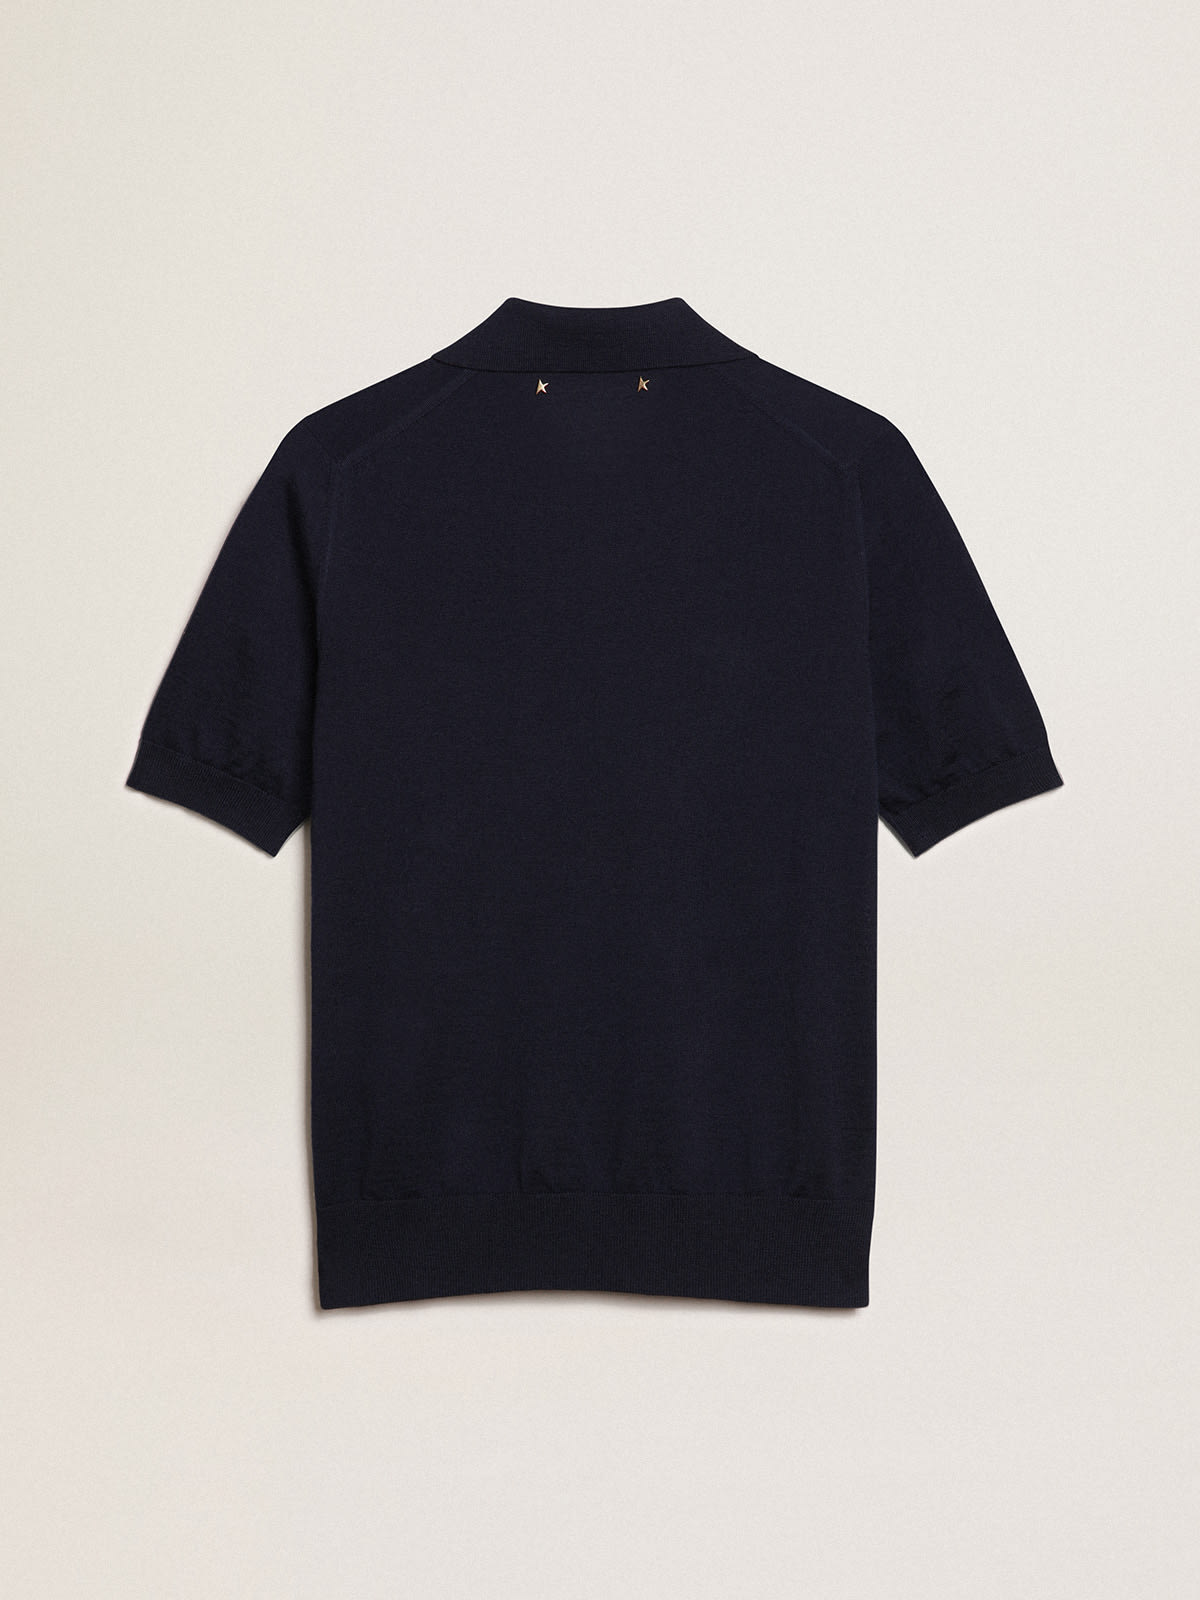 Golden Goose - Women’s polo shirt in navy-blue merino wool in 